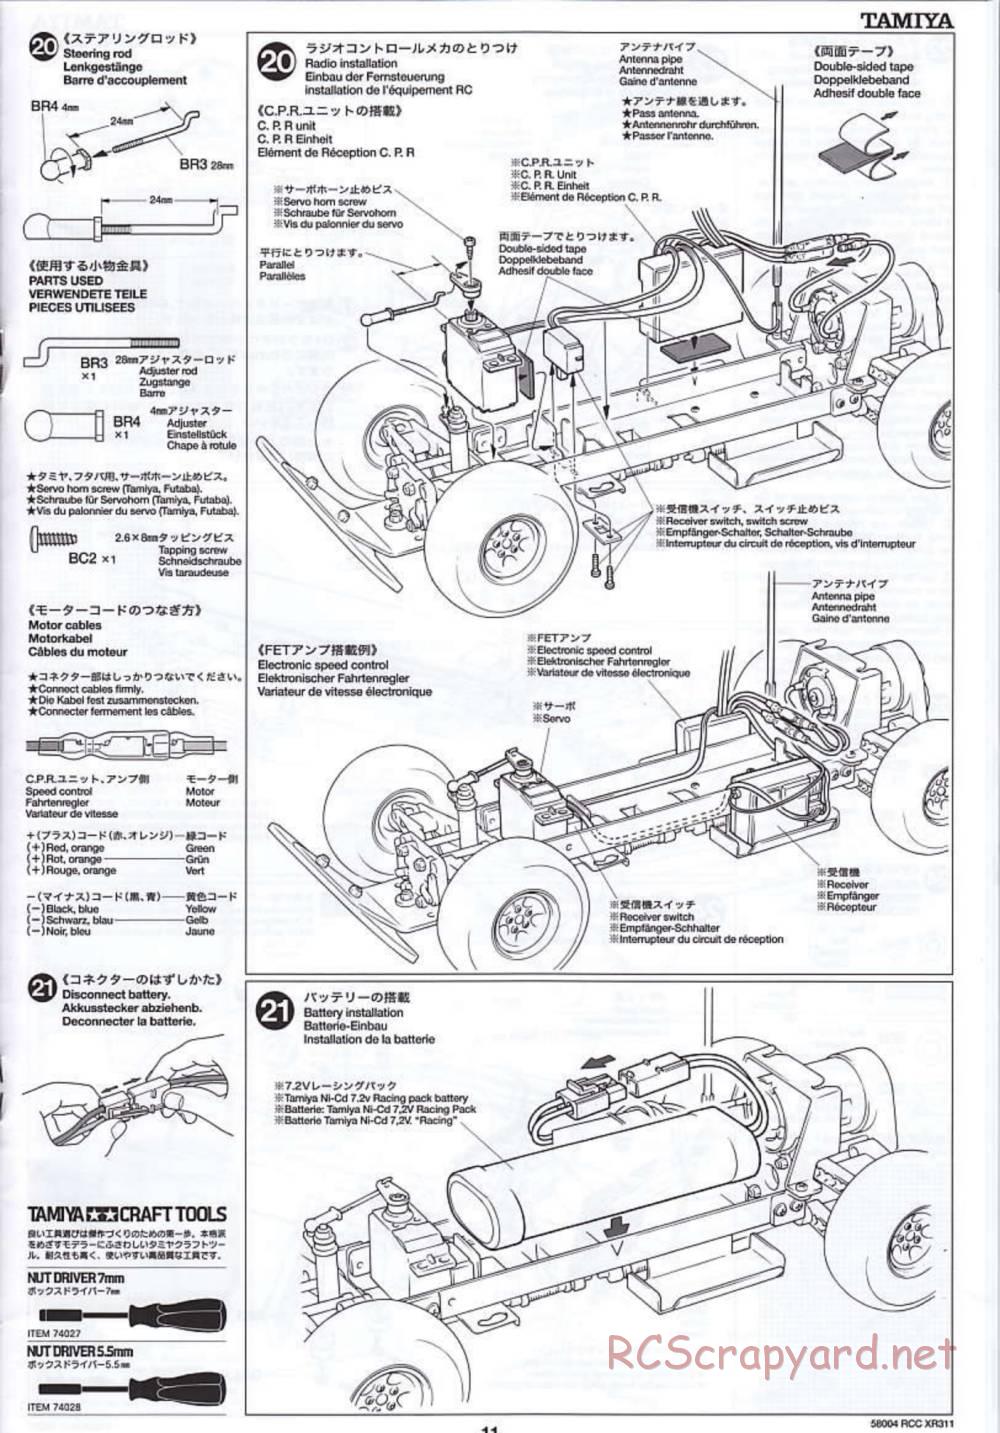 Tamiya - XR311 Combat Support Vehicle (2000) - 58004 - Manual - Page 12